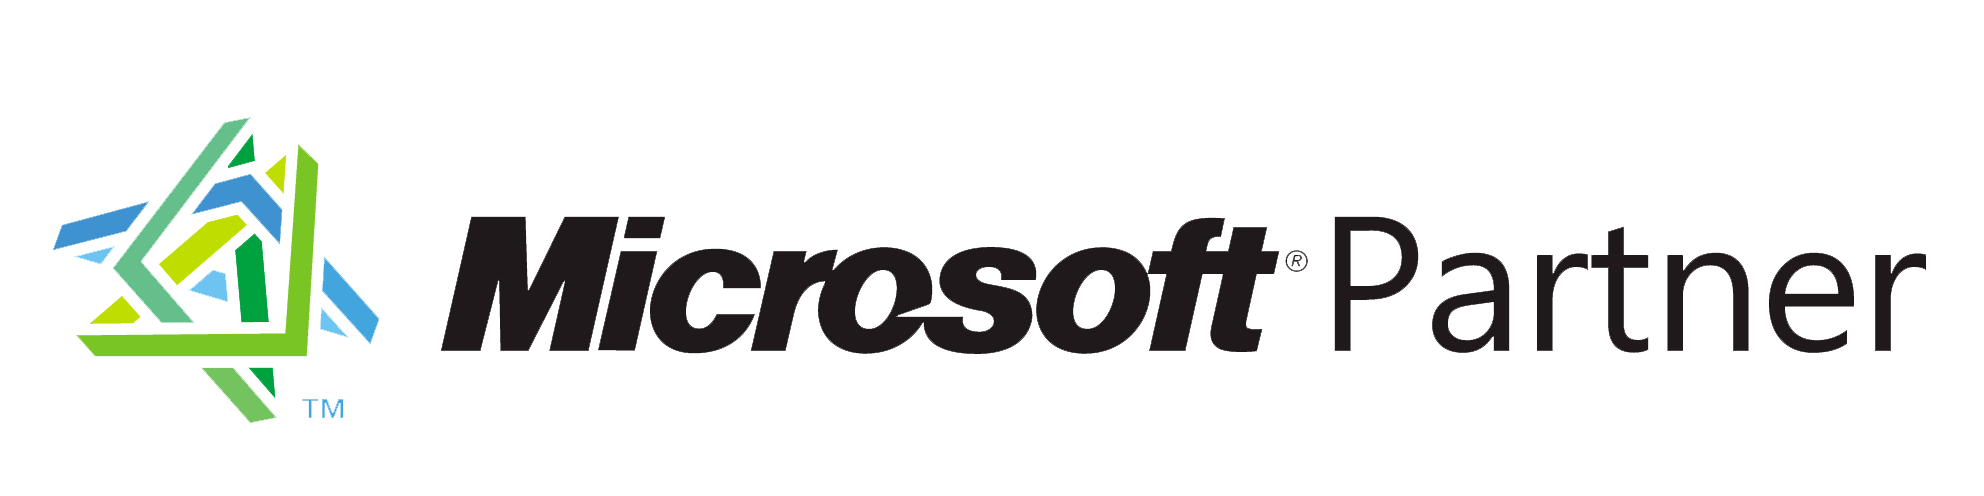 Microsoft 365 partner